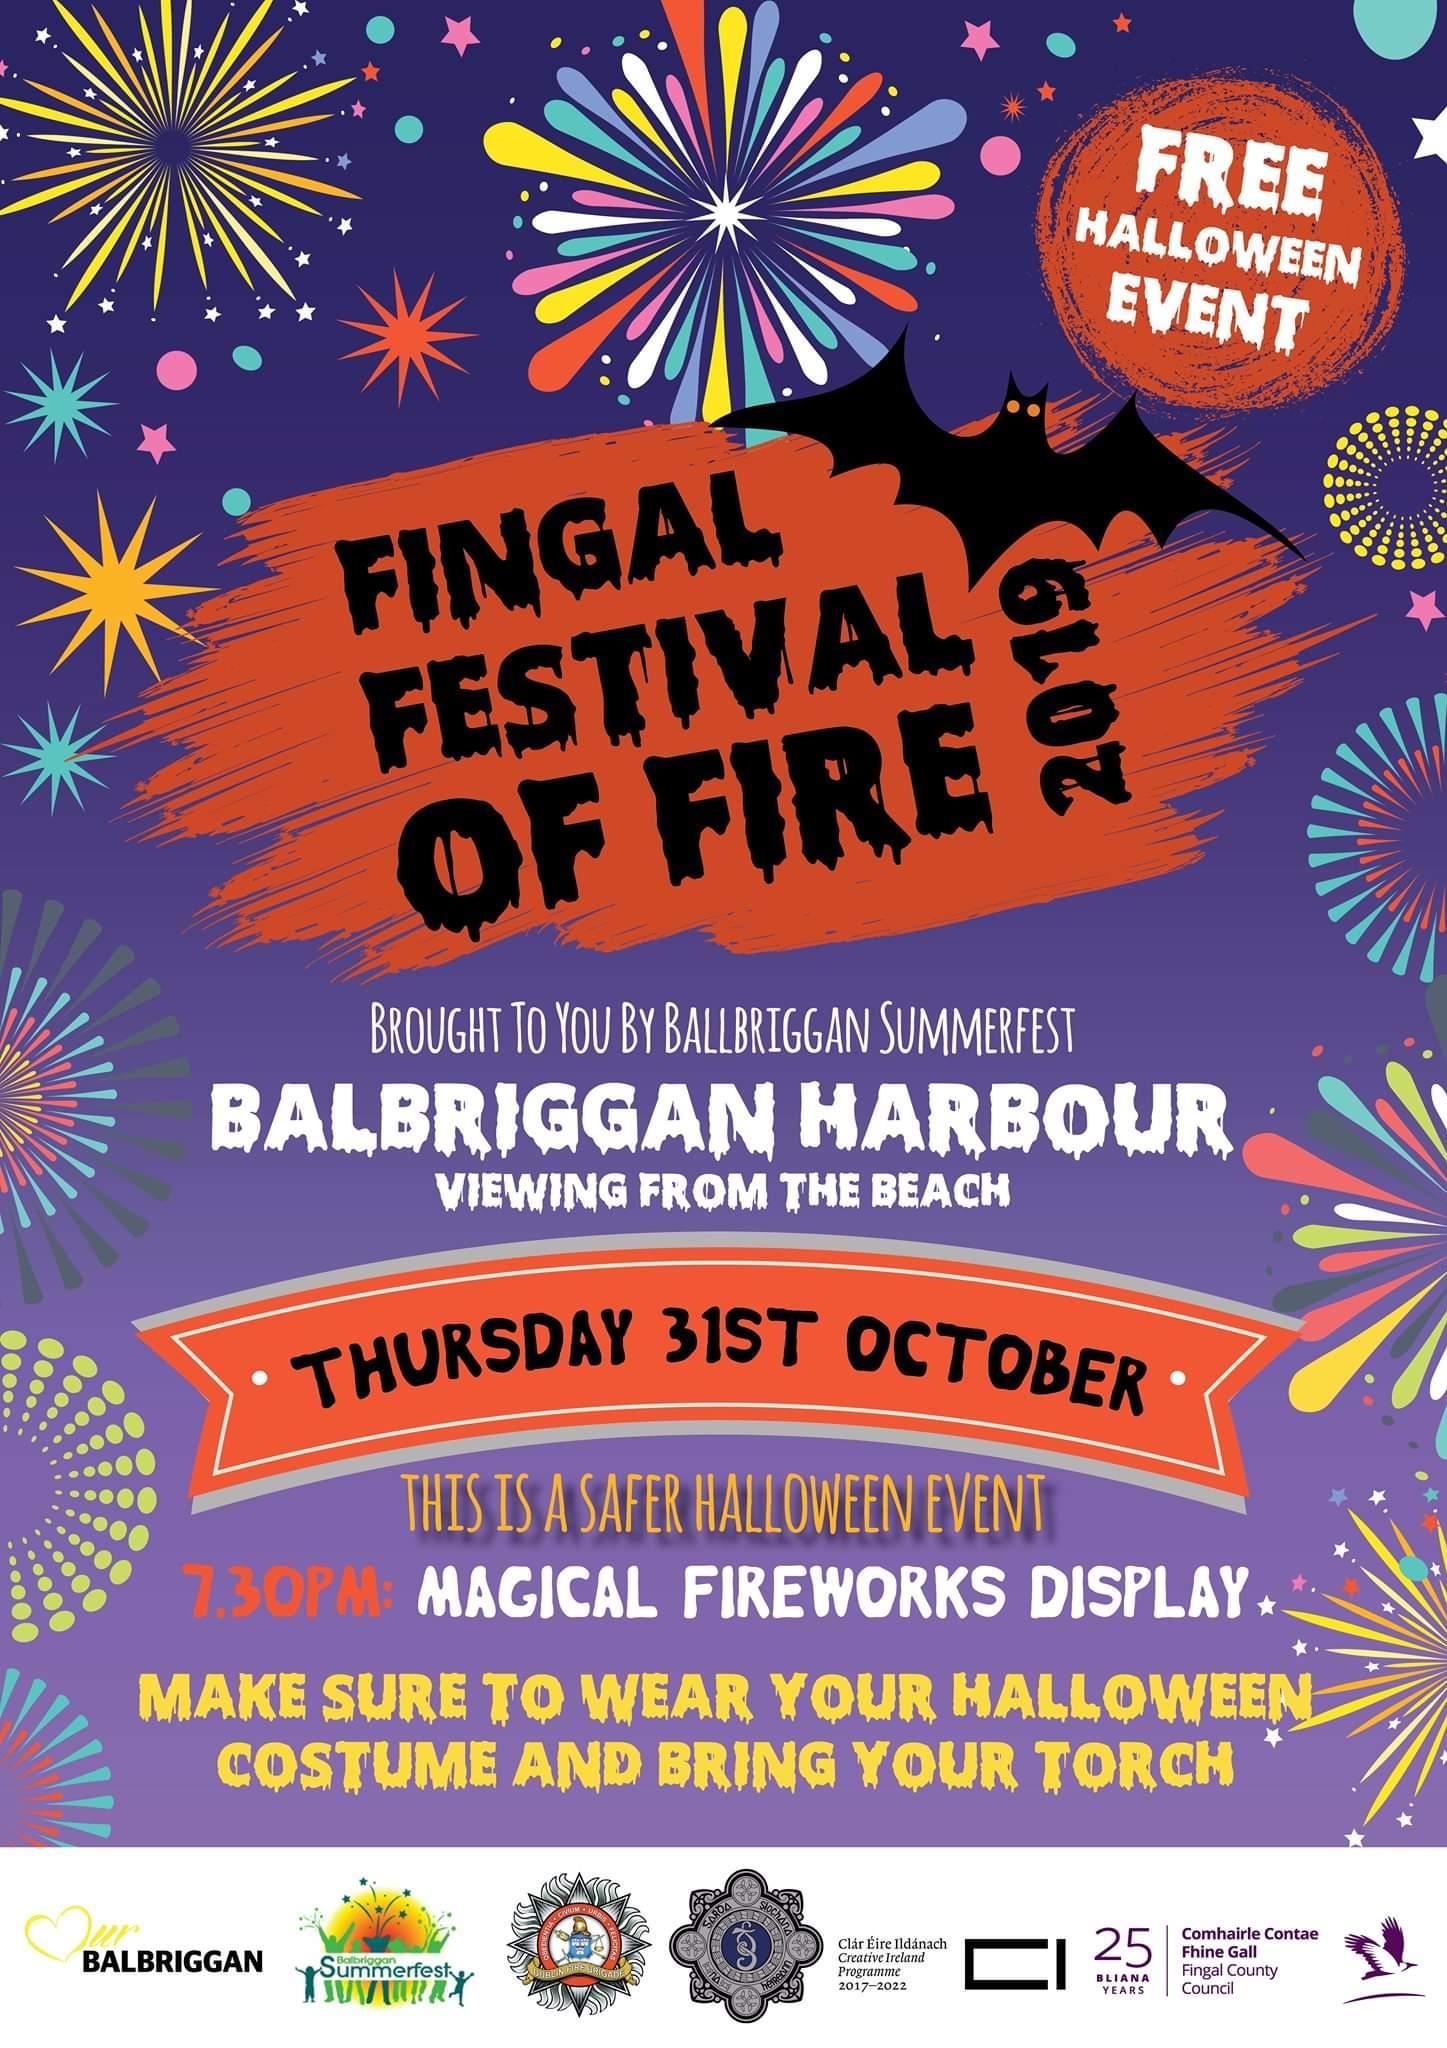 Balbriggan Festival of Fire